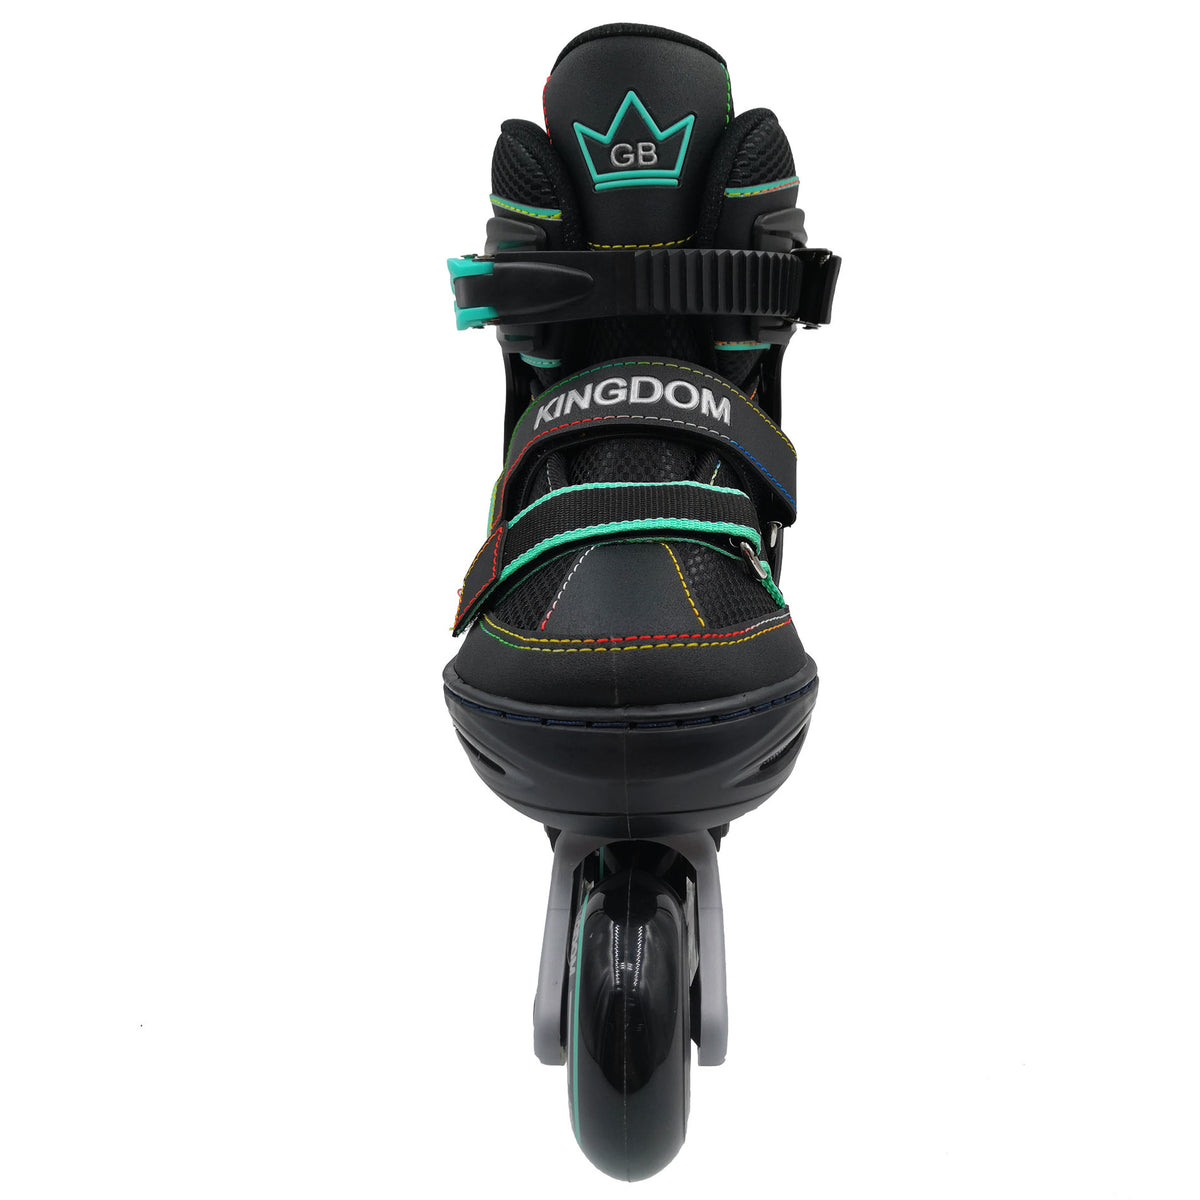 Kingdom GB Metro Flash Adjustable Inline Roller Skates Illuminating Light up Wheels Black Turquoise green